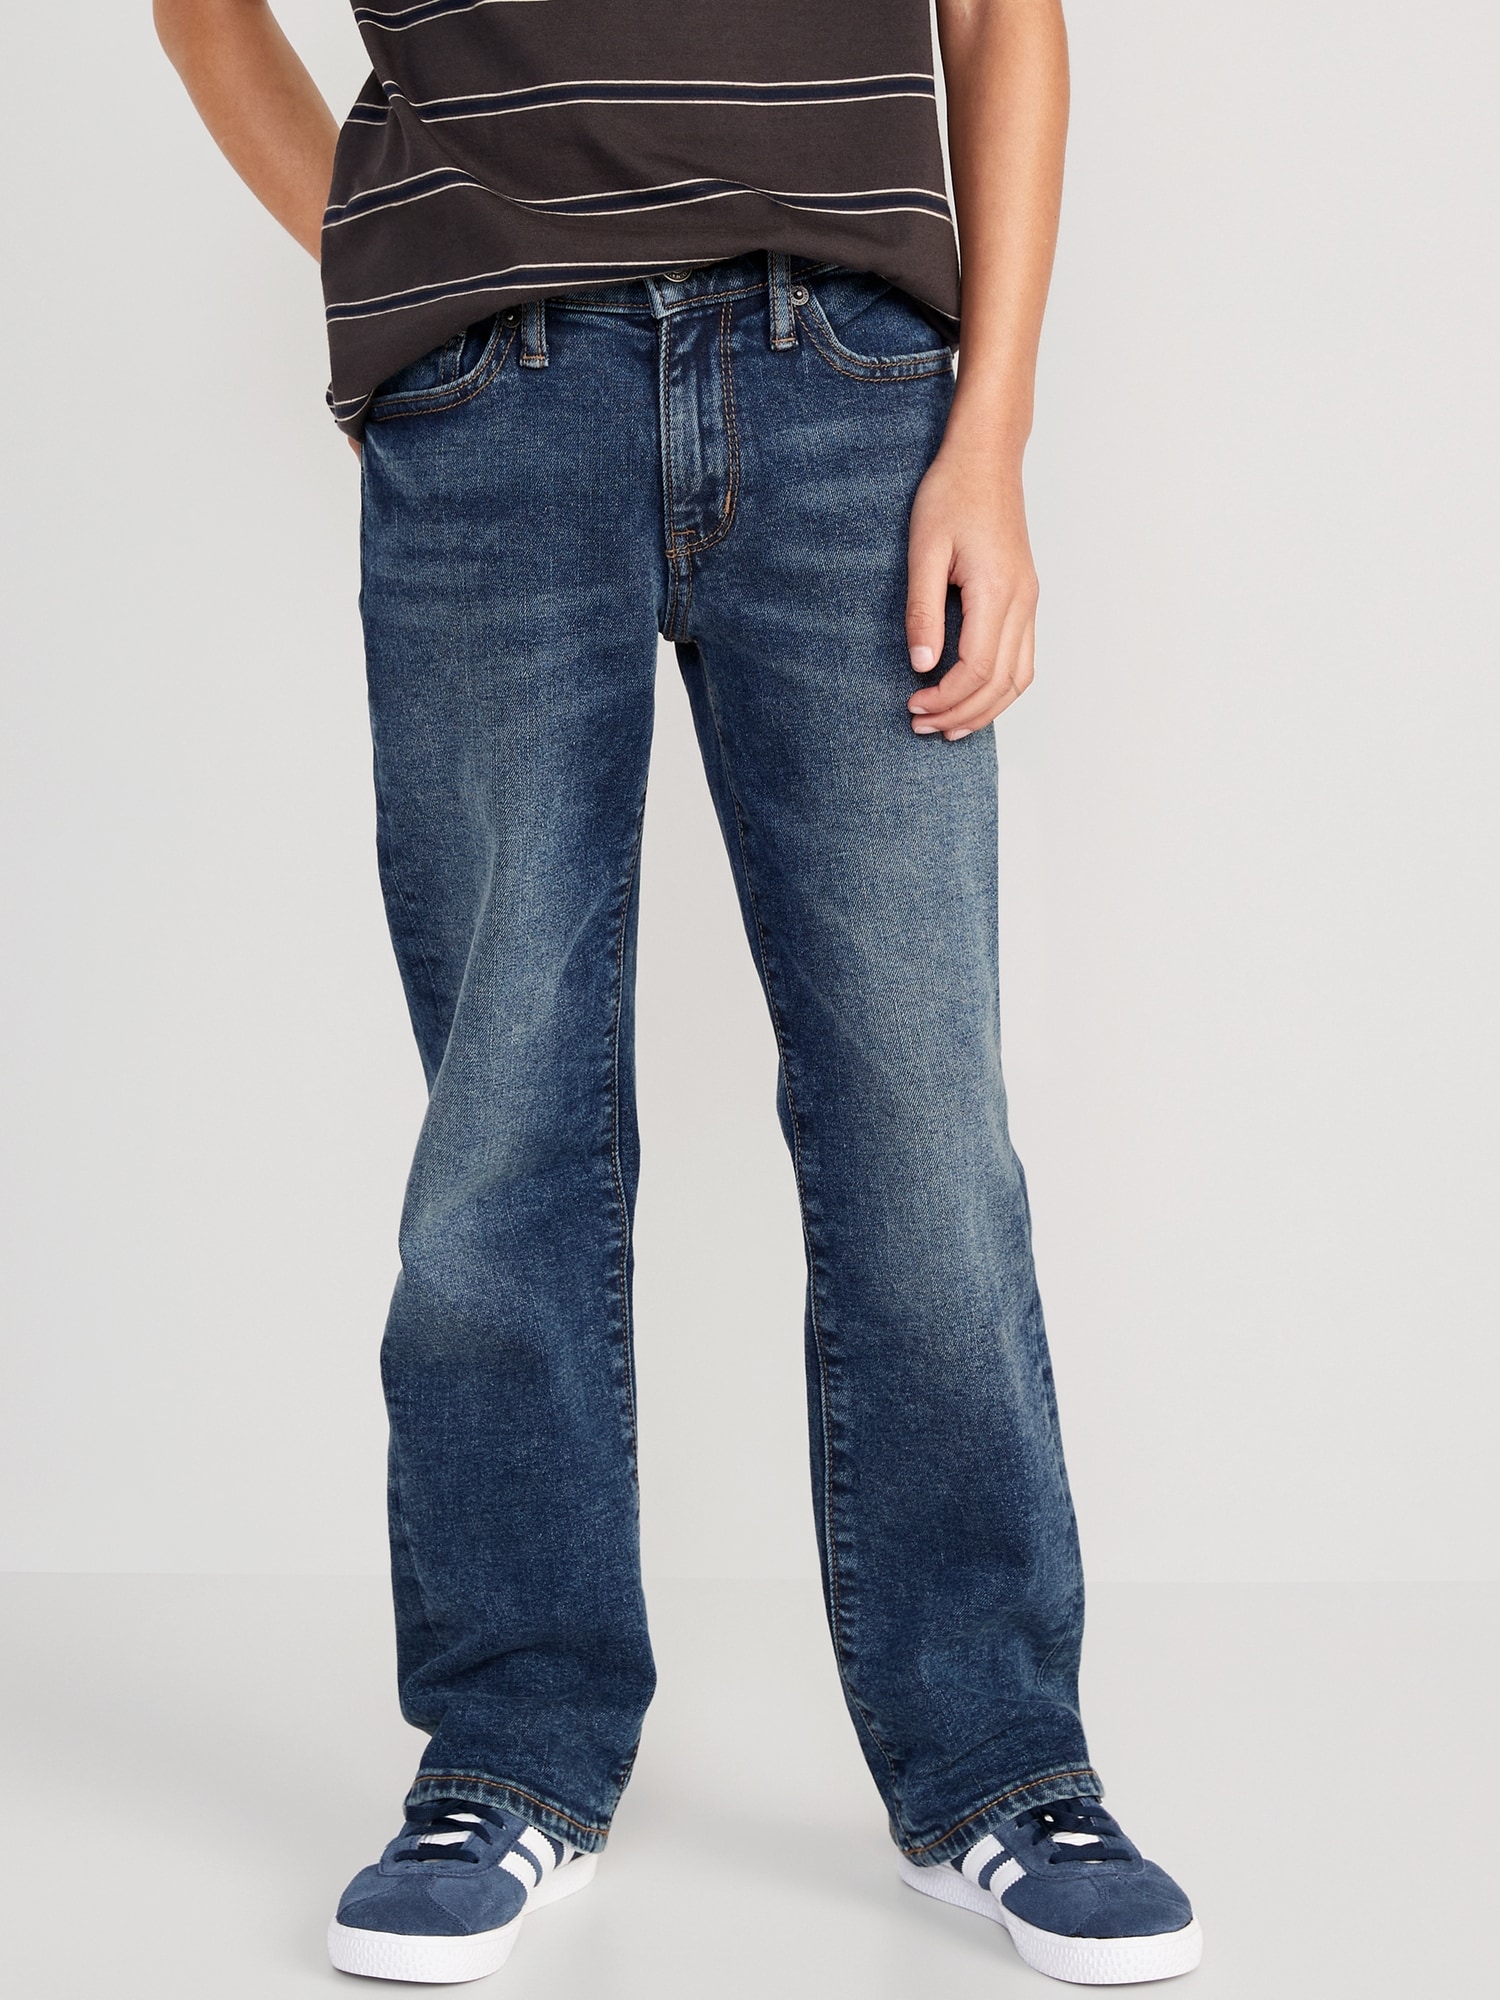 Built-In Flex Boot-Cut Jeans for Boys Hot Deal